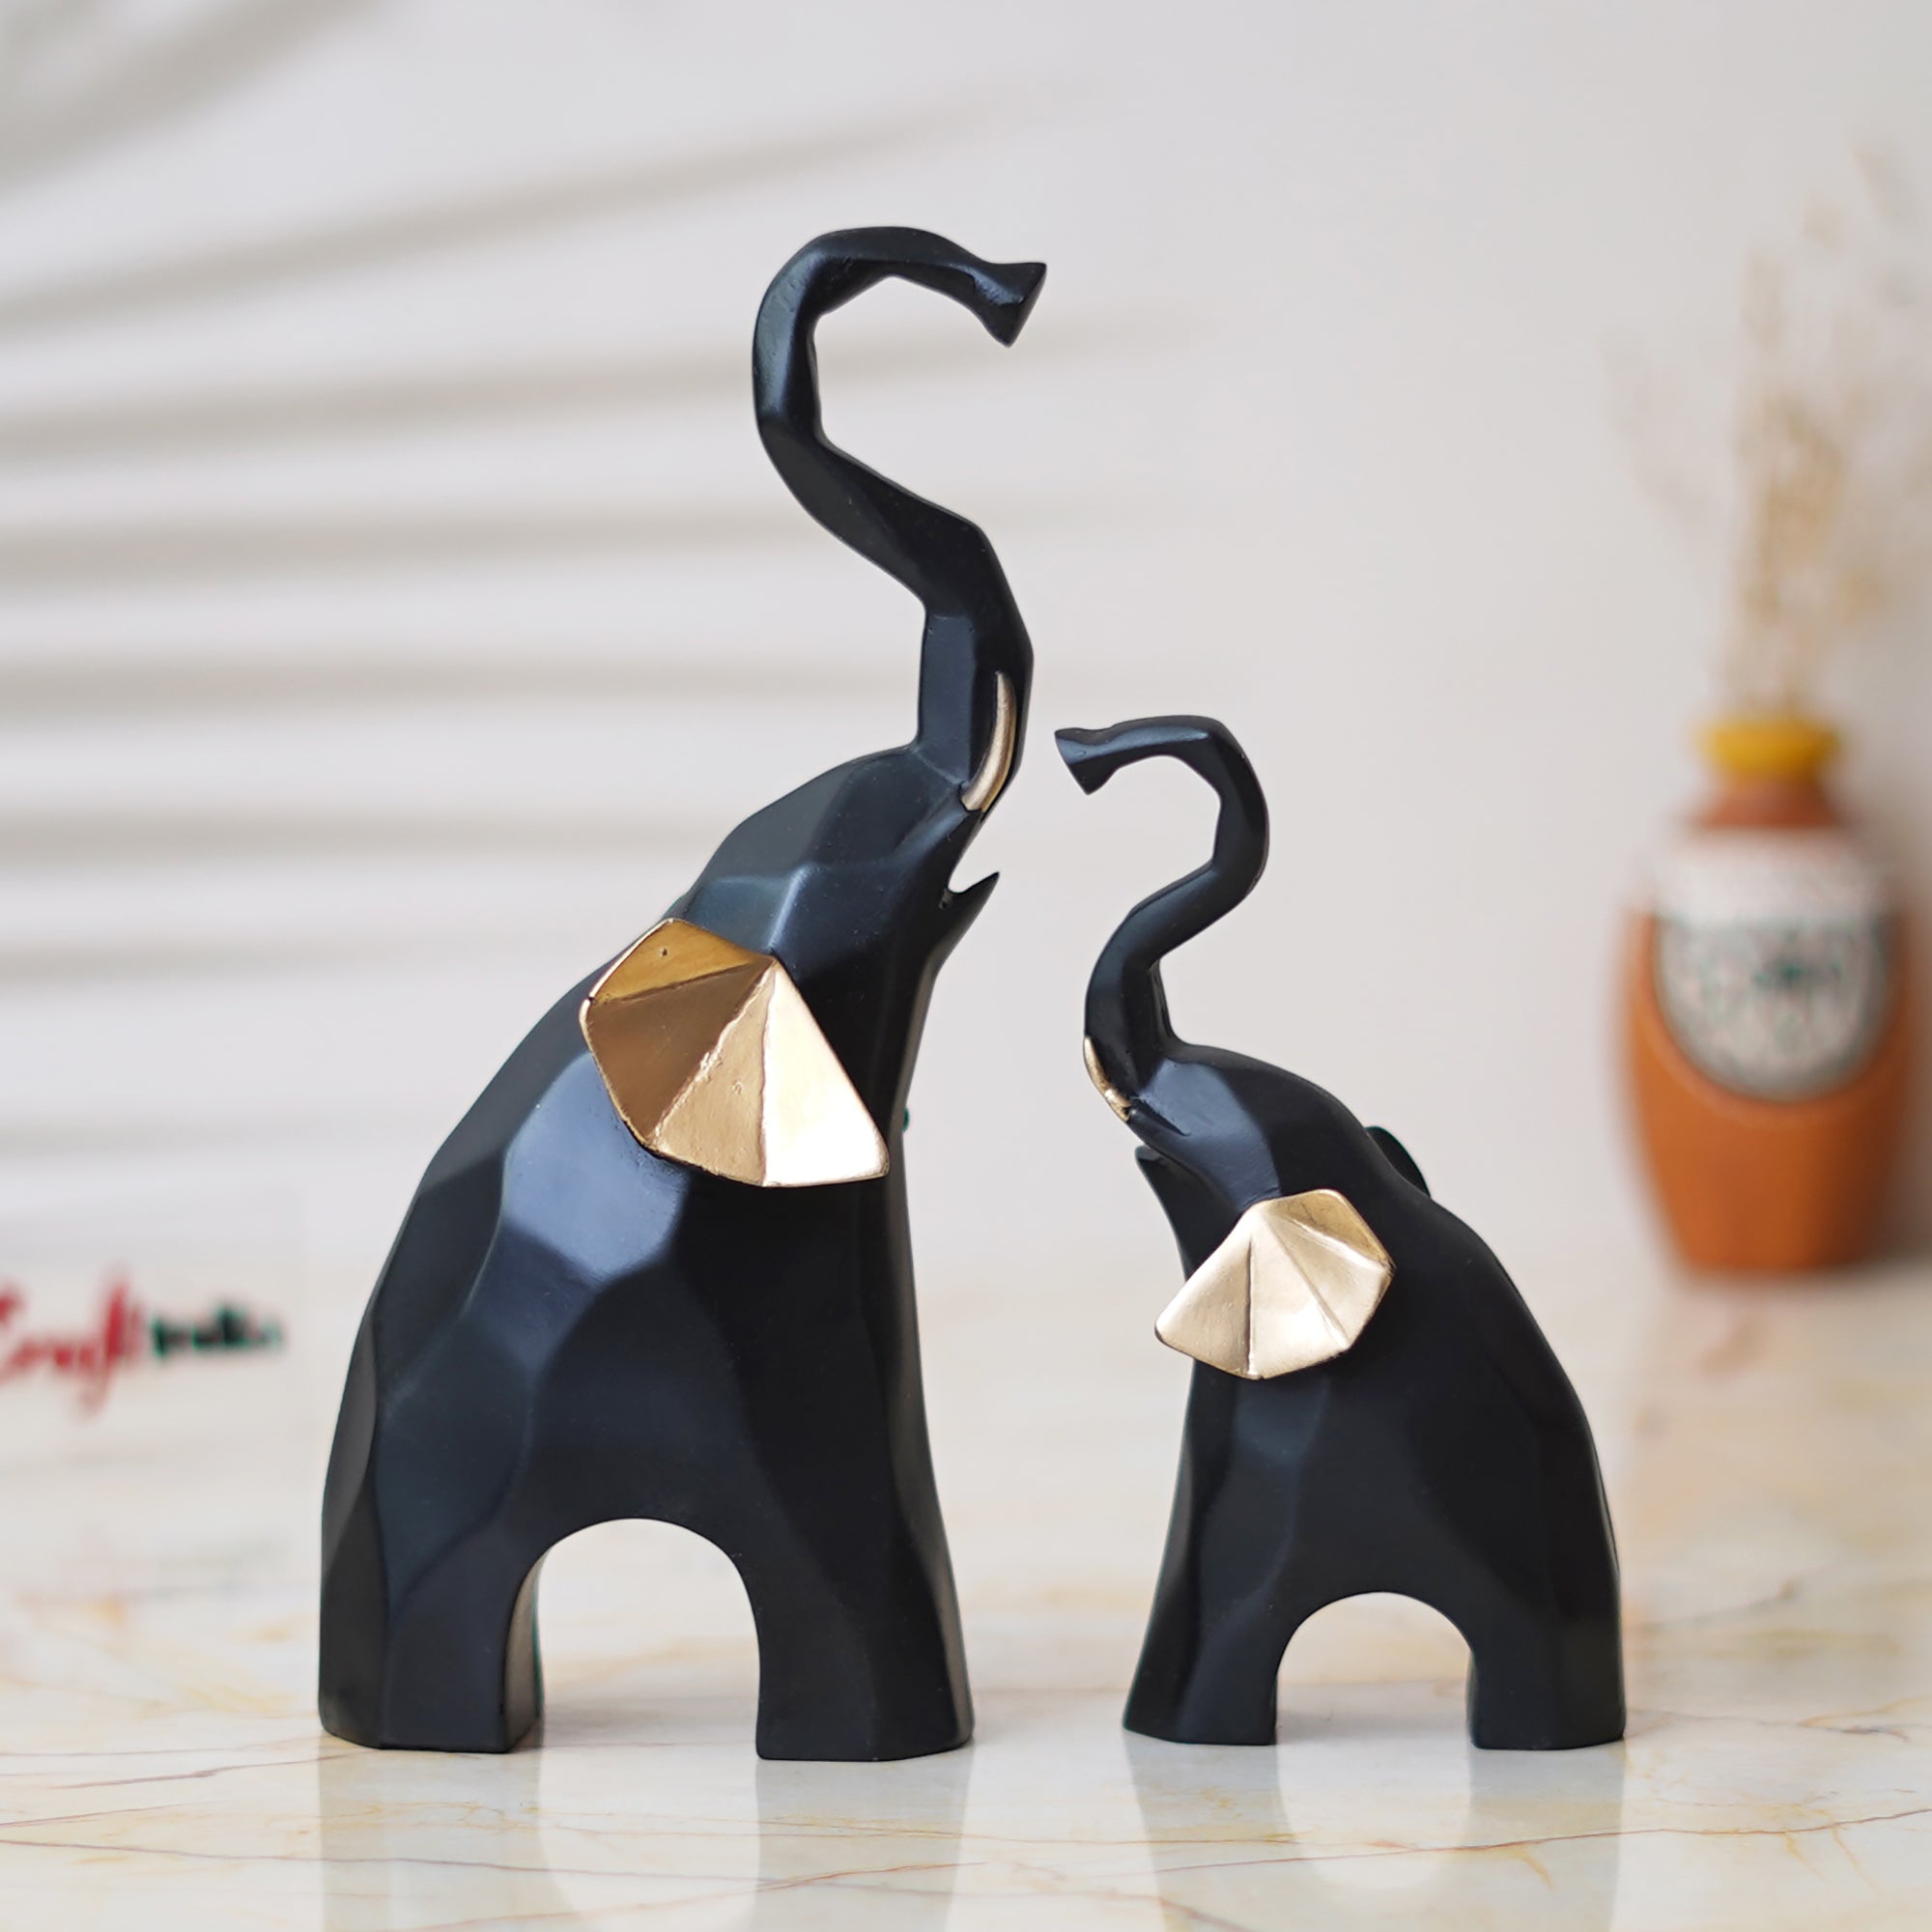 Set of 2 Gold & Black Elephant Statues Decorative Animal Showpieces 1